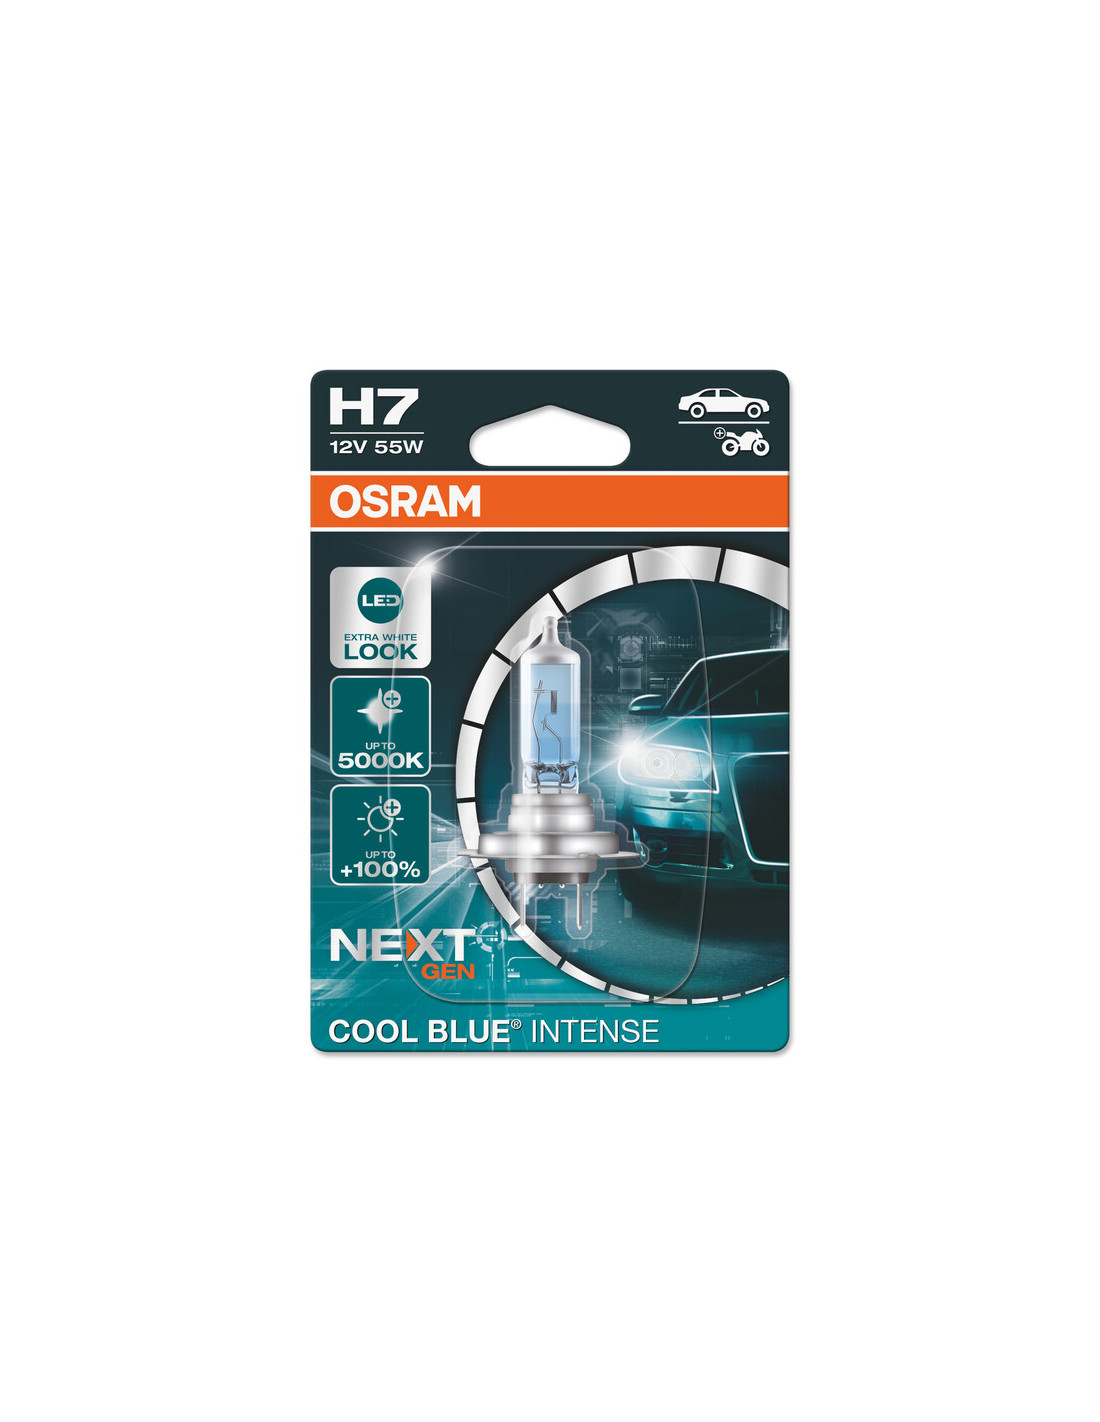 OSRAM Cool Blue Intense H7 55W